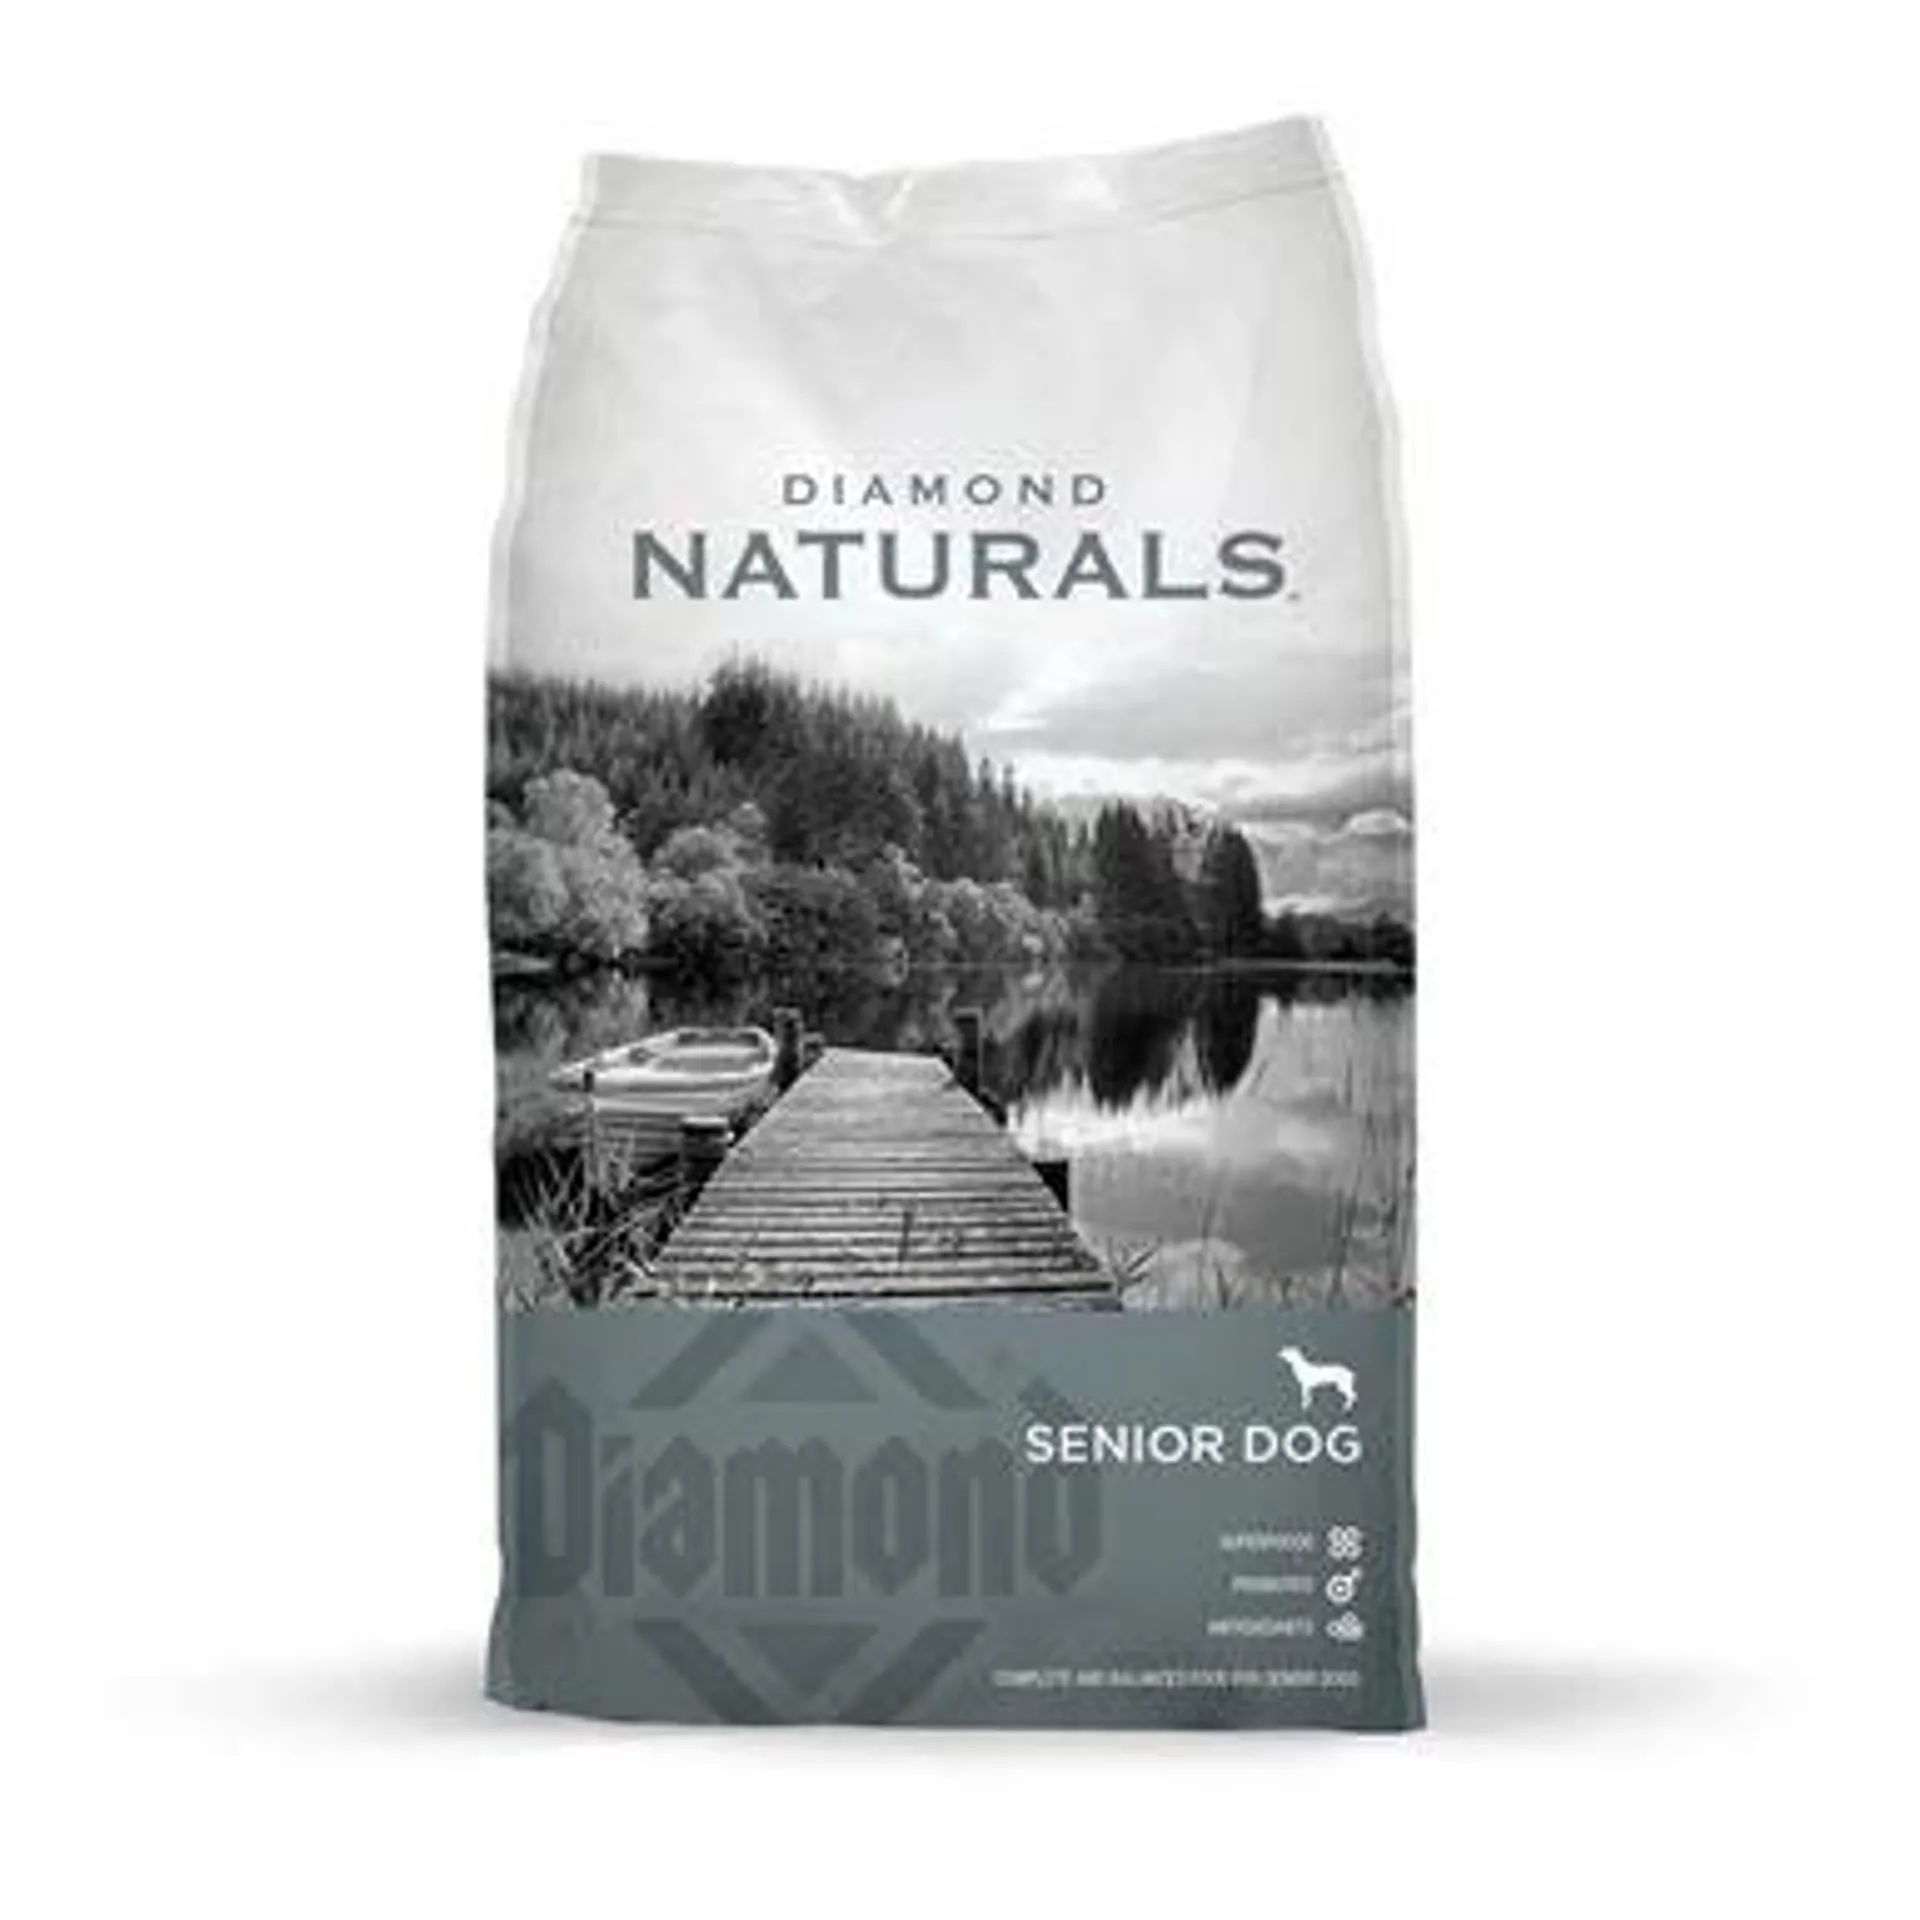 Diamond Naturals Senior Dog Food, 35 pound bag